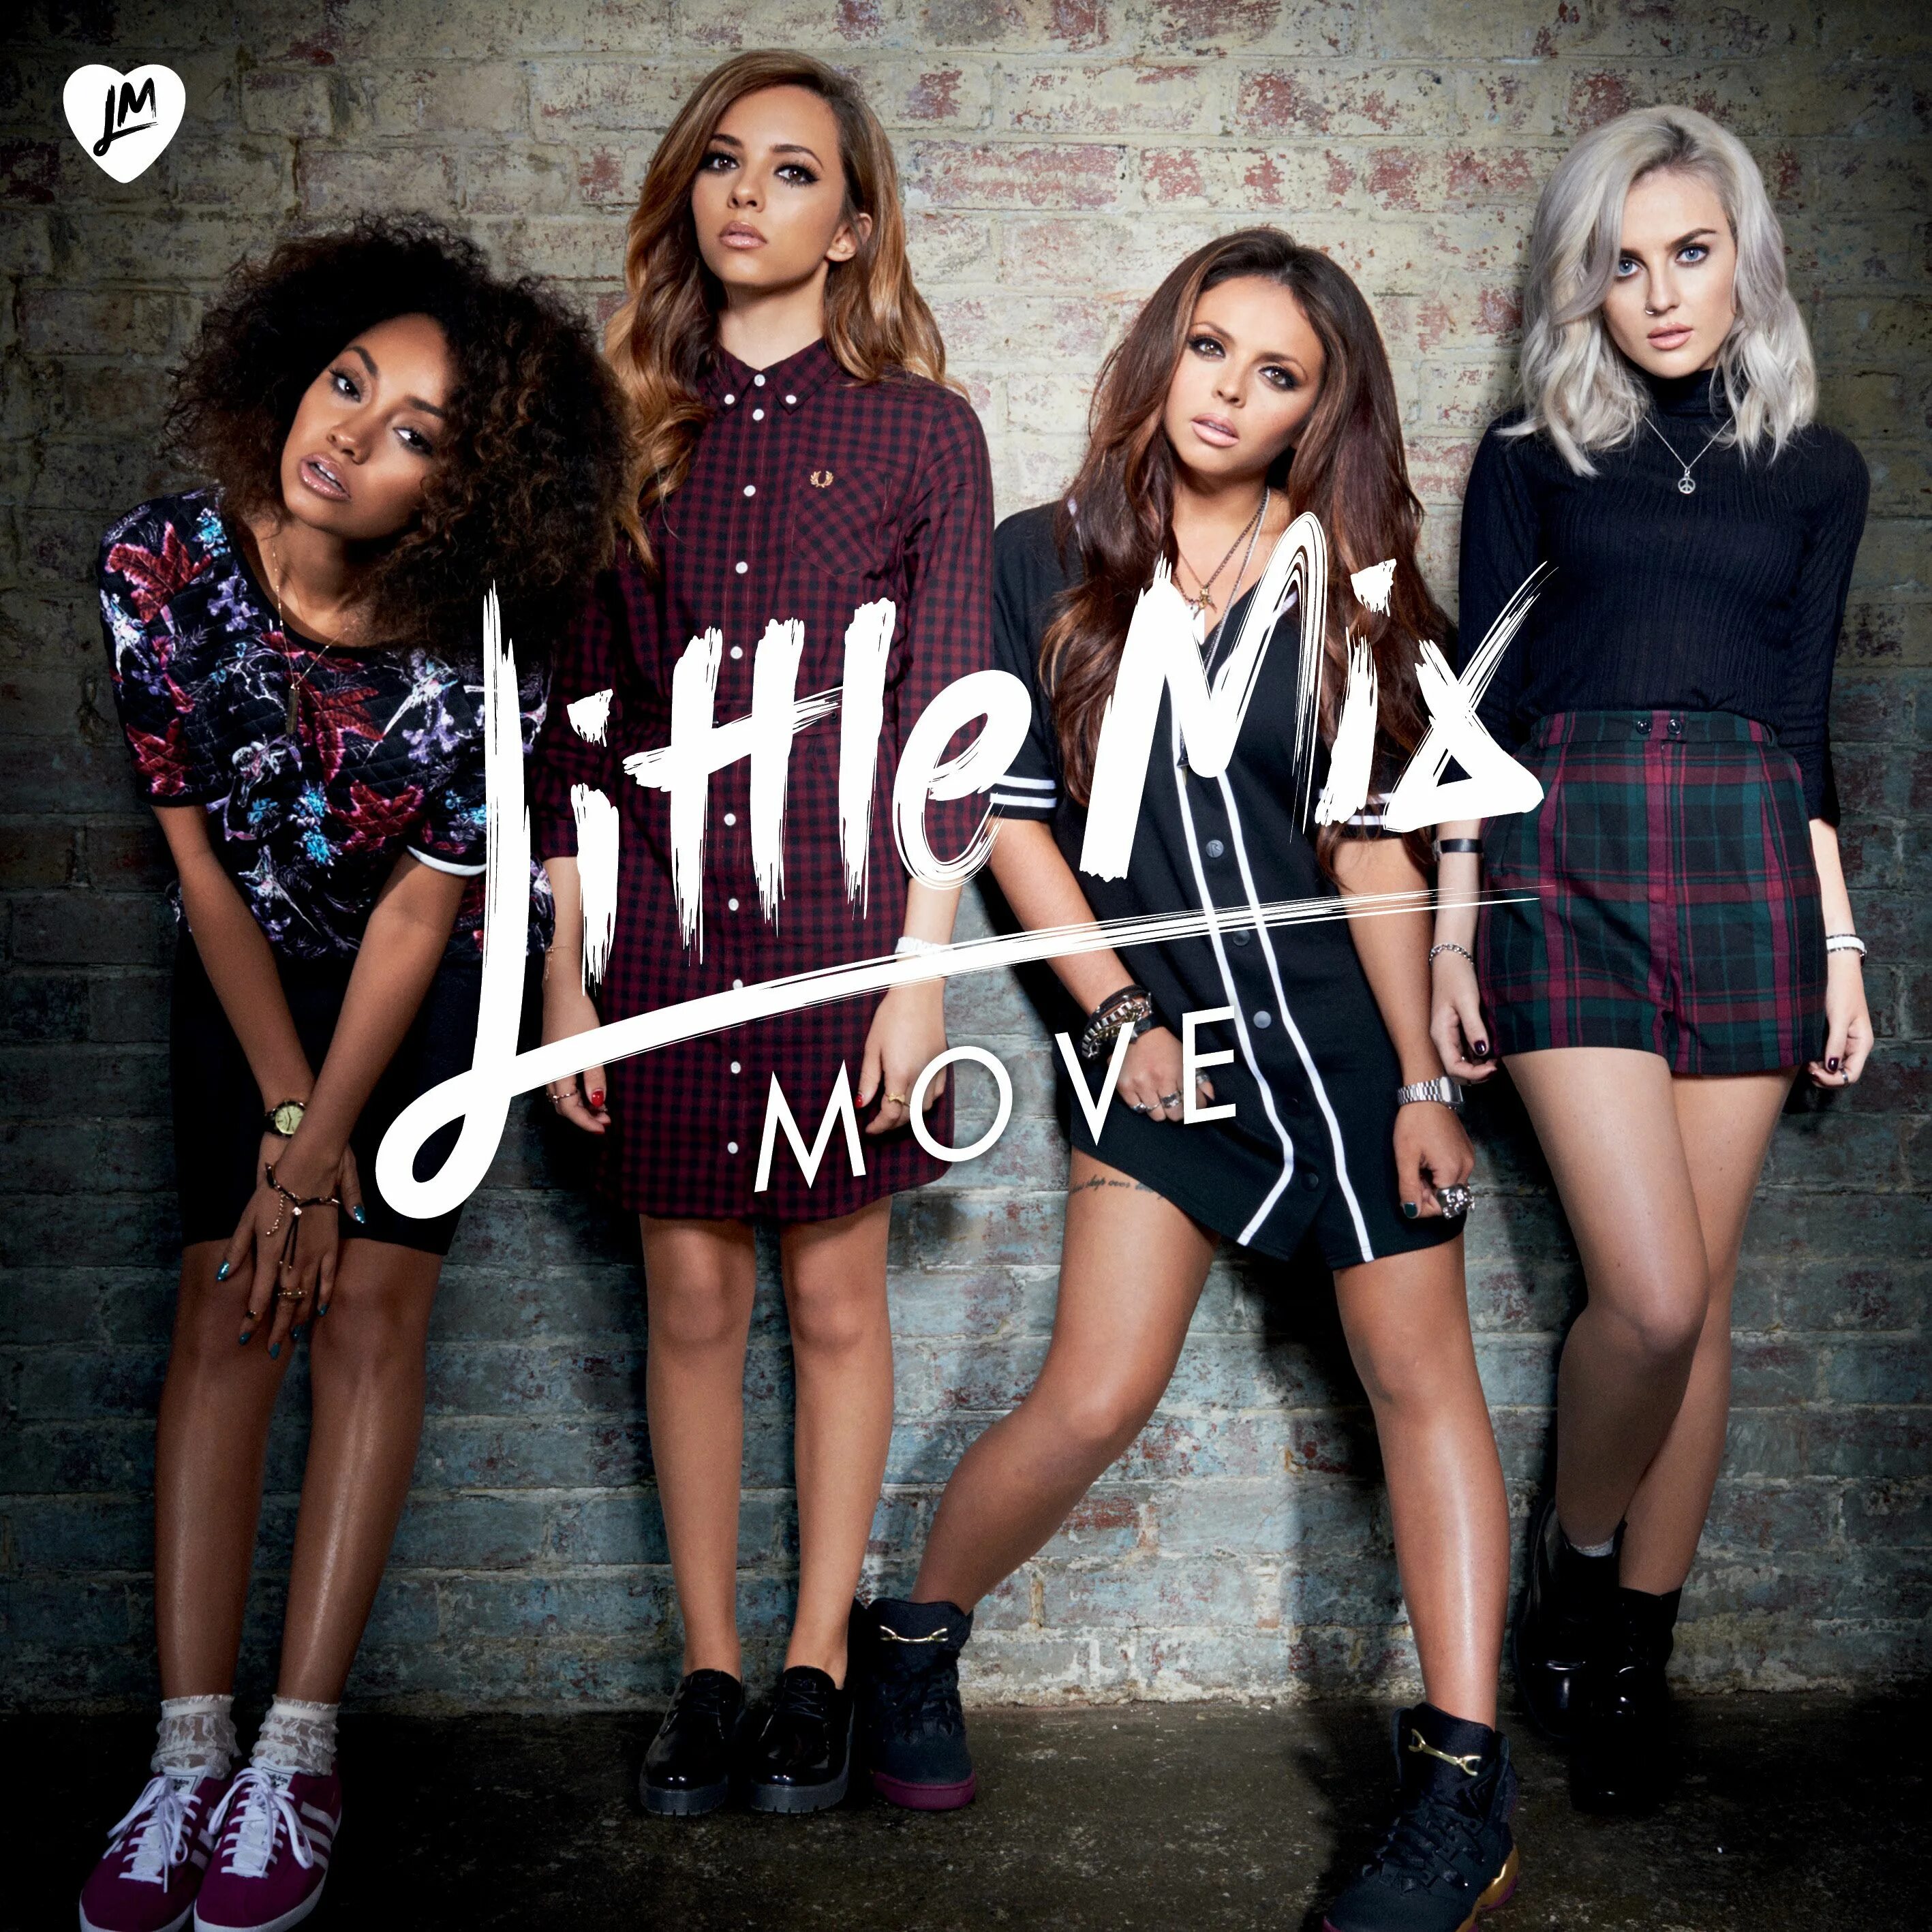 Музыка микс слушать. Little Mix обложка. Little Mix move. Группа микс. Обложки песен little Mix.